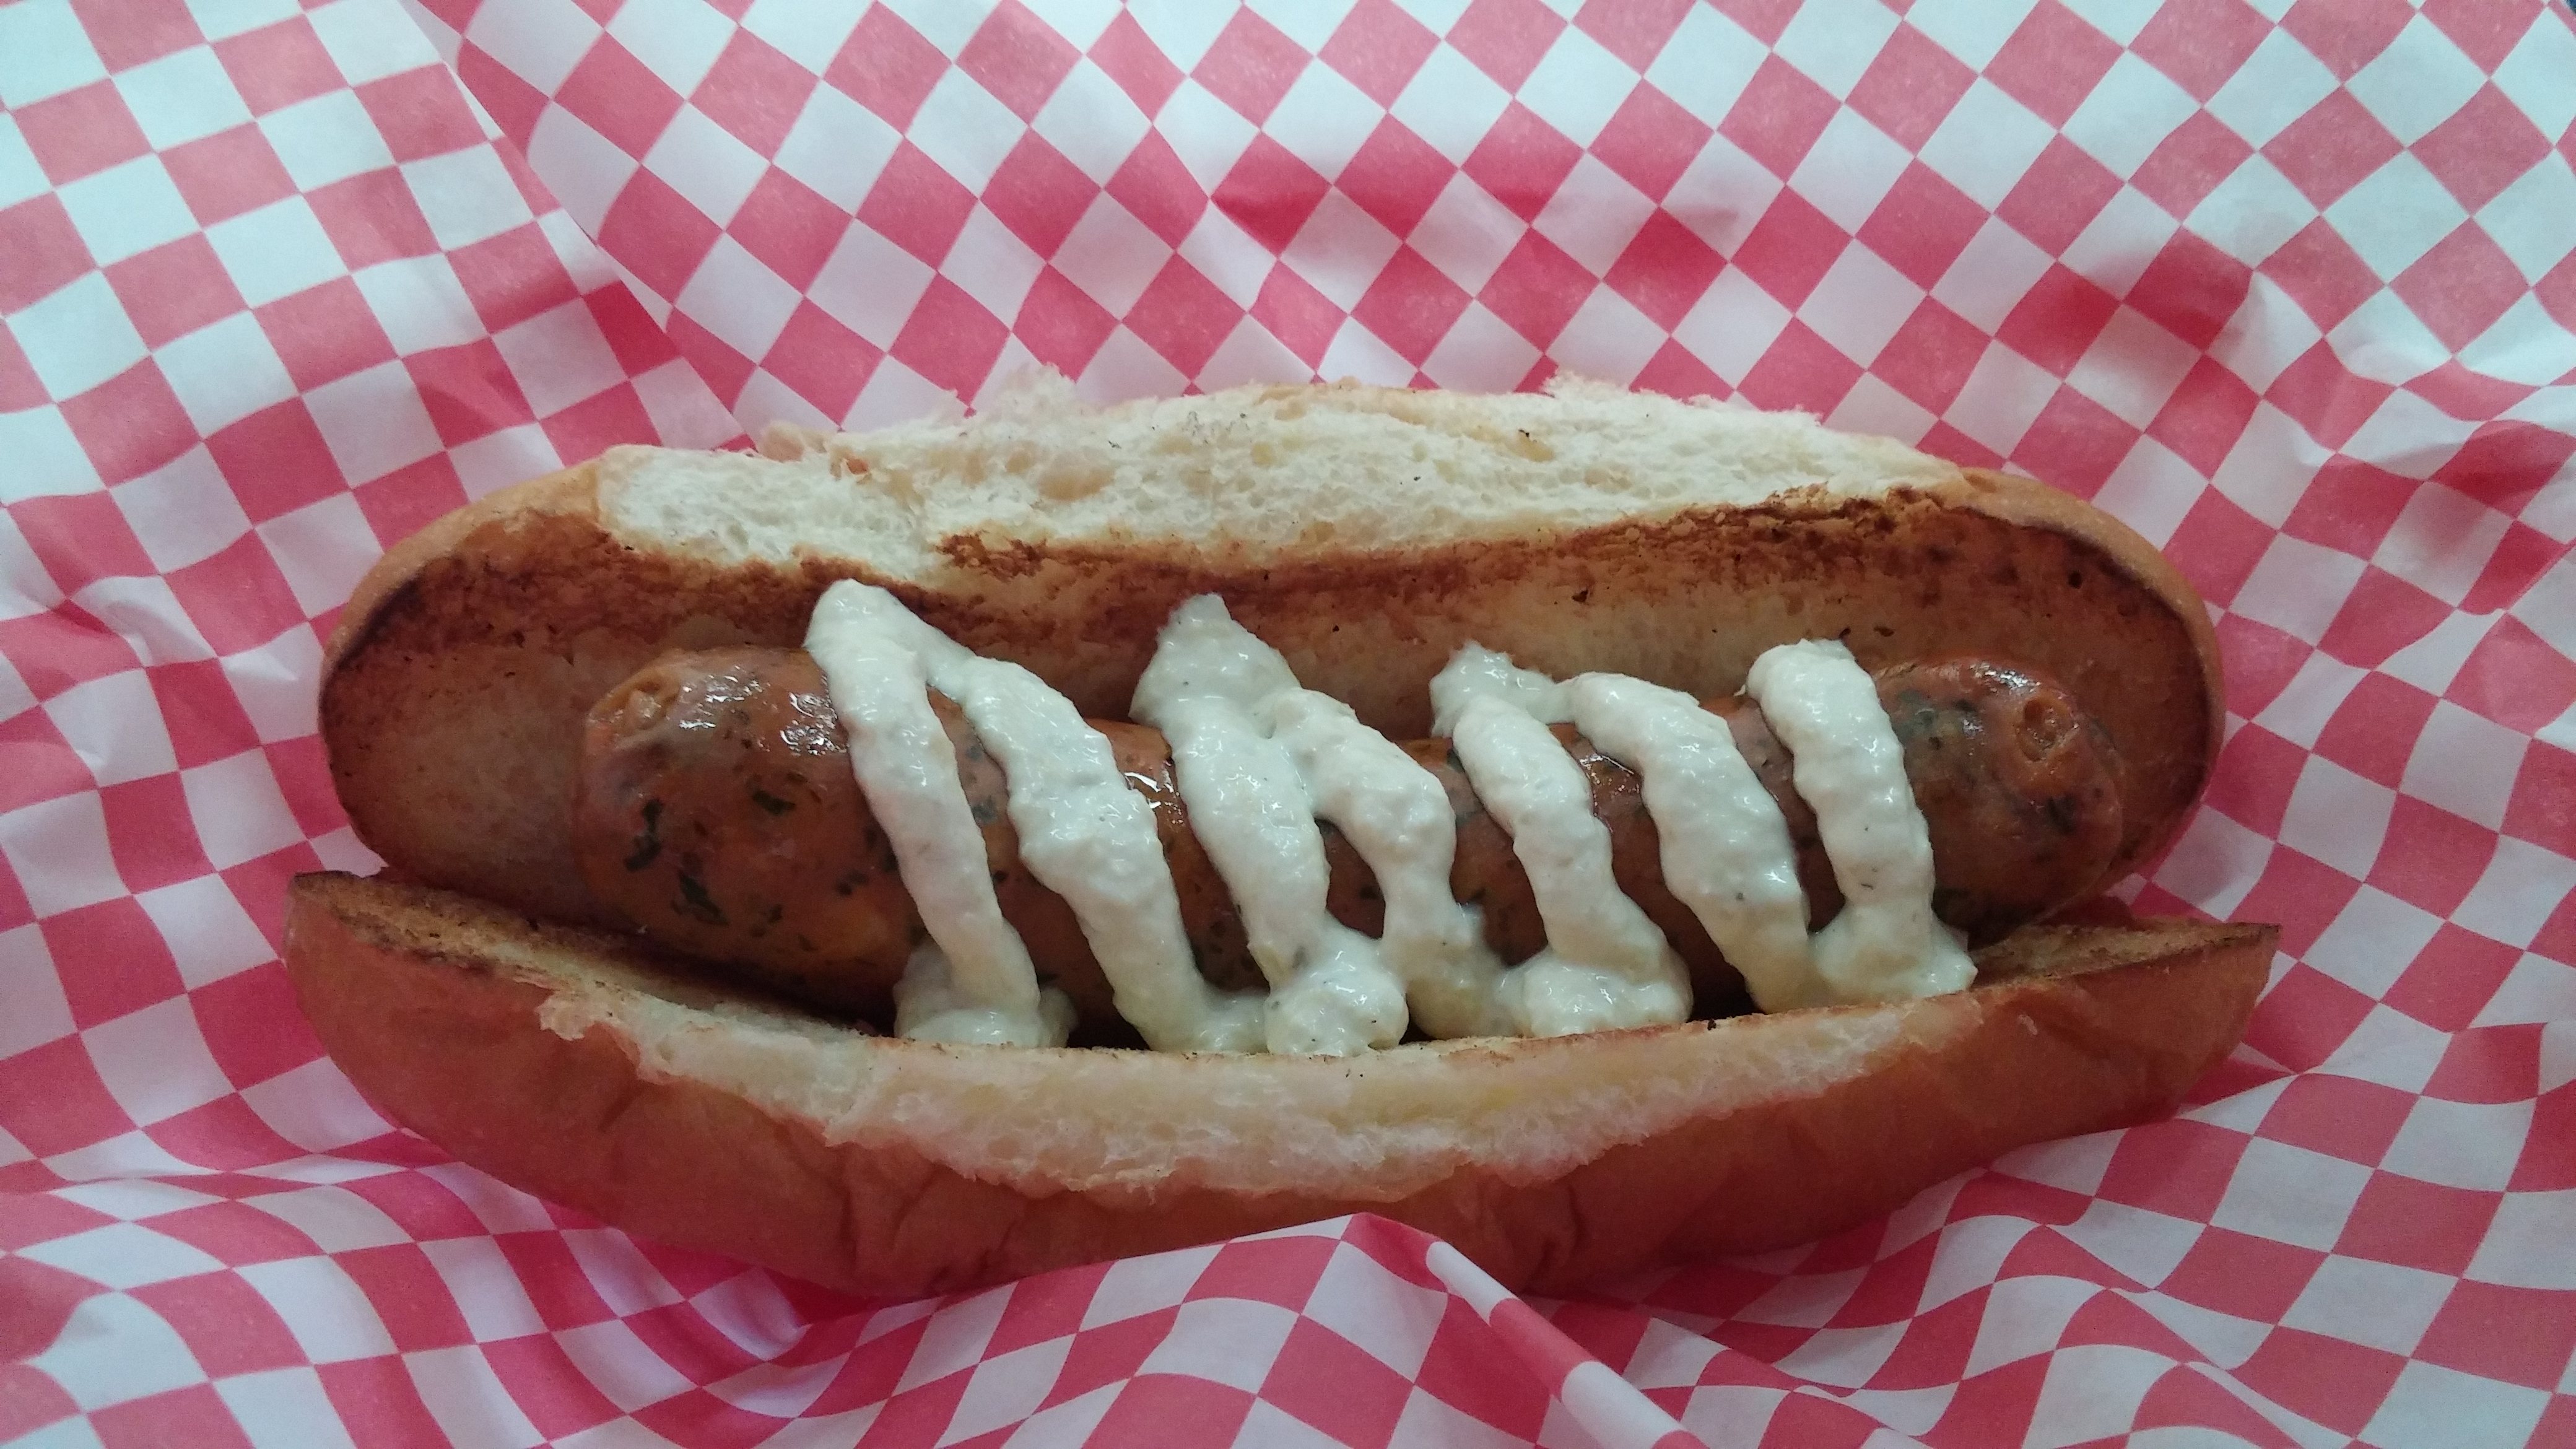 Hot dog. Photo: Big Island Top Dogs